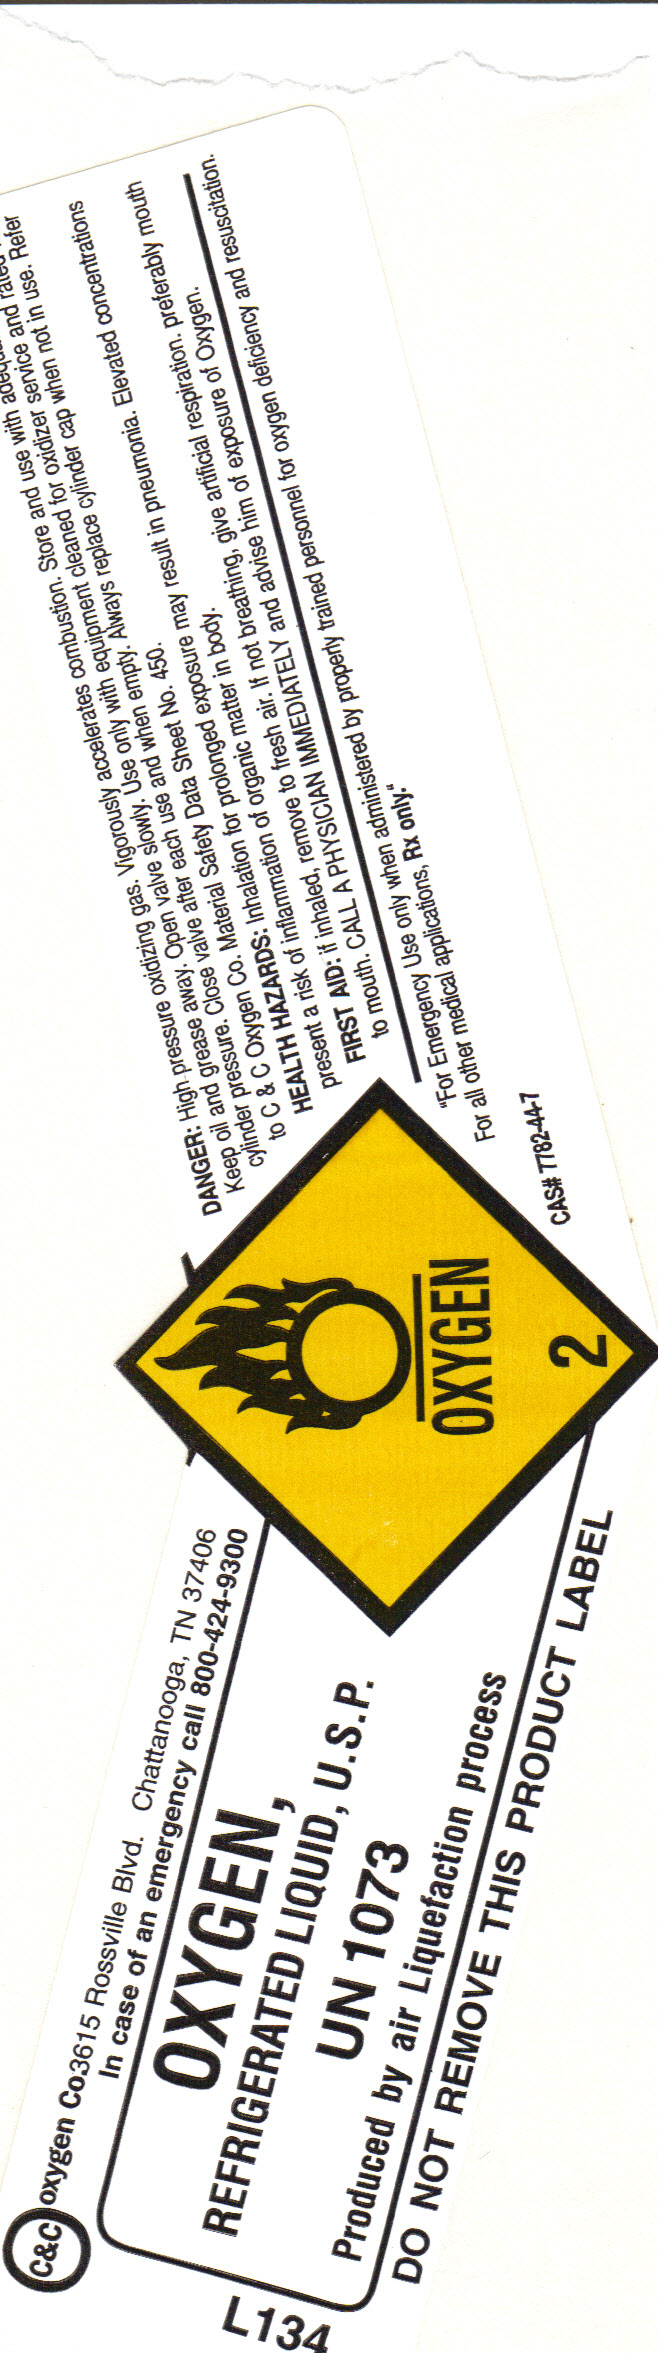 image of liquid oxygen label